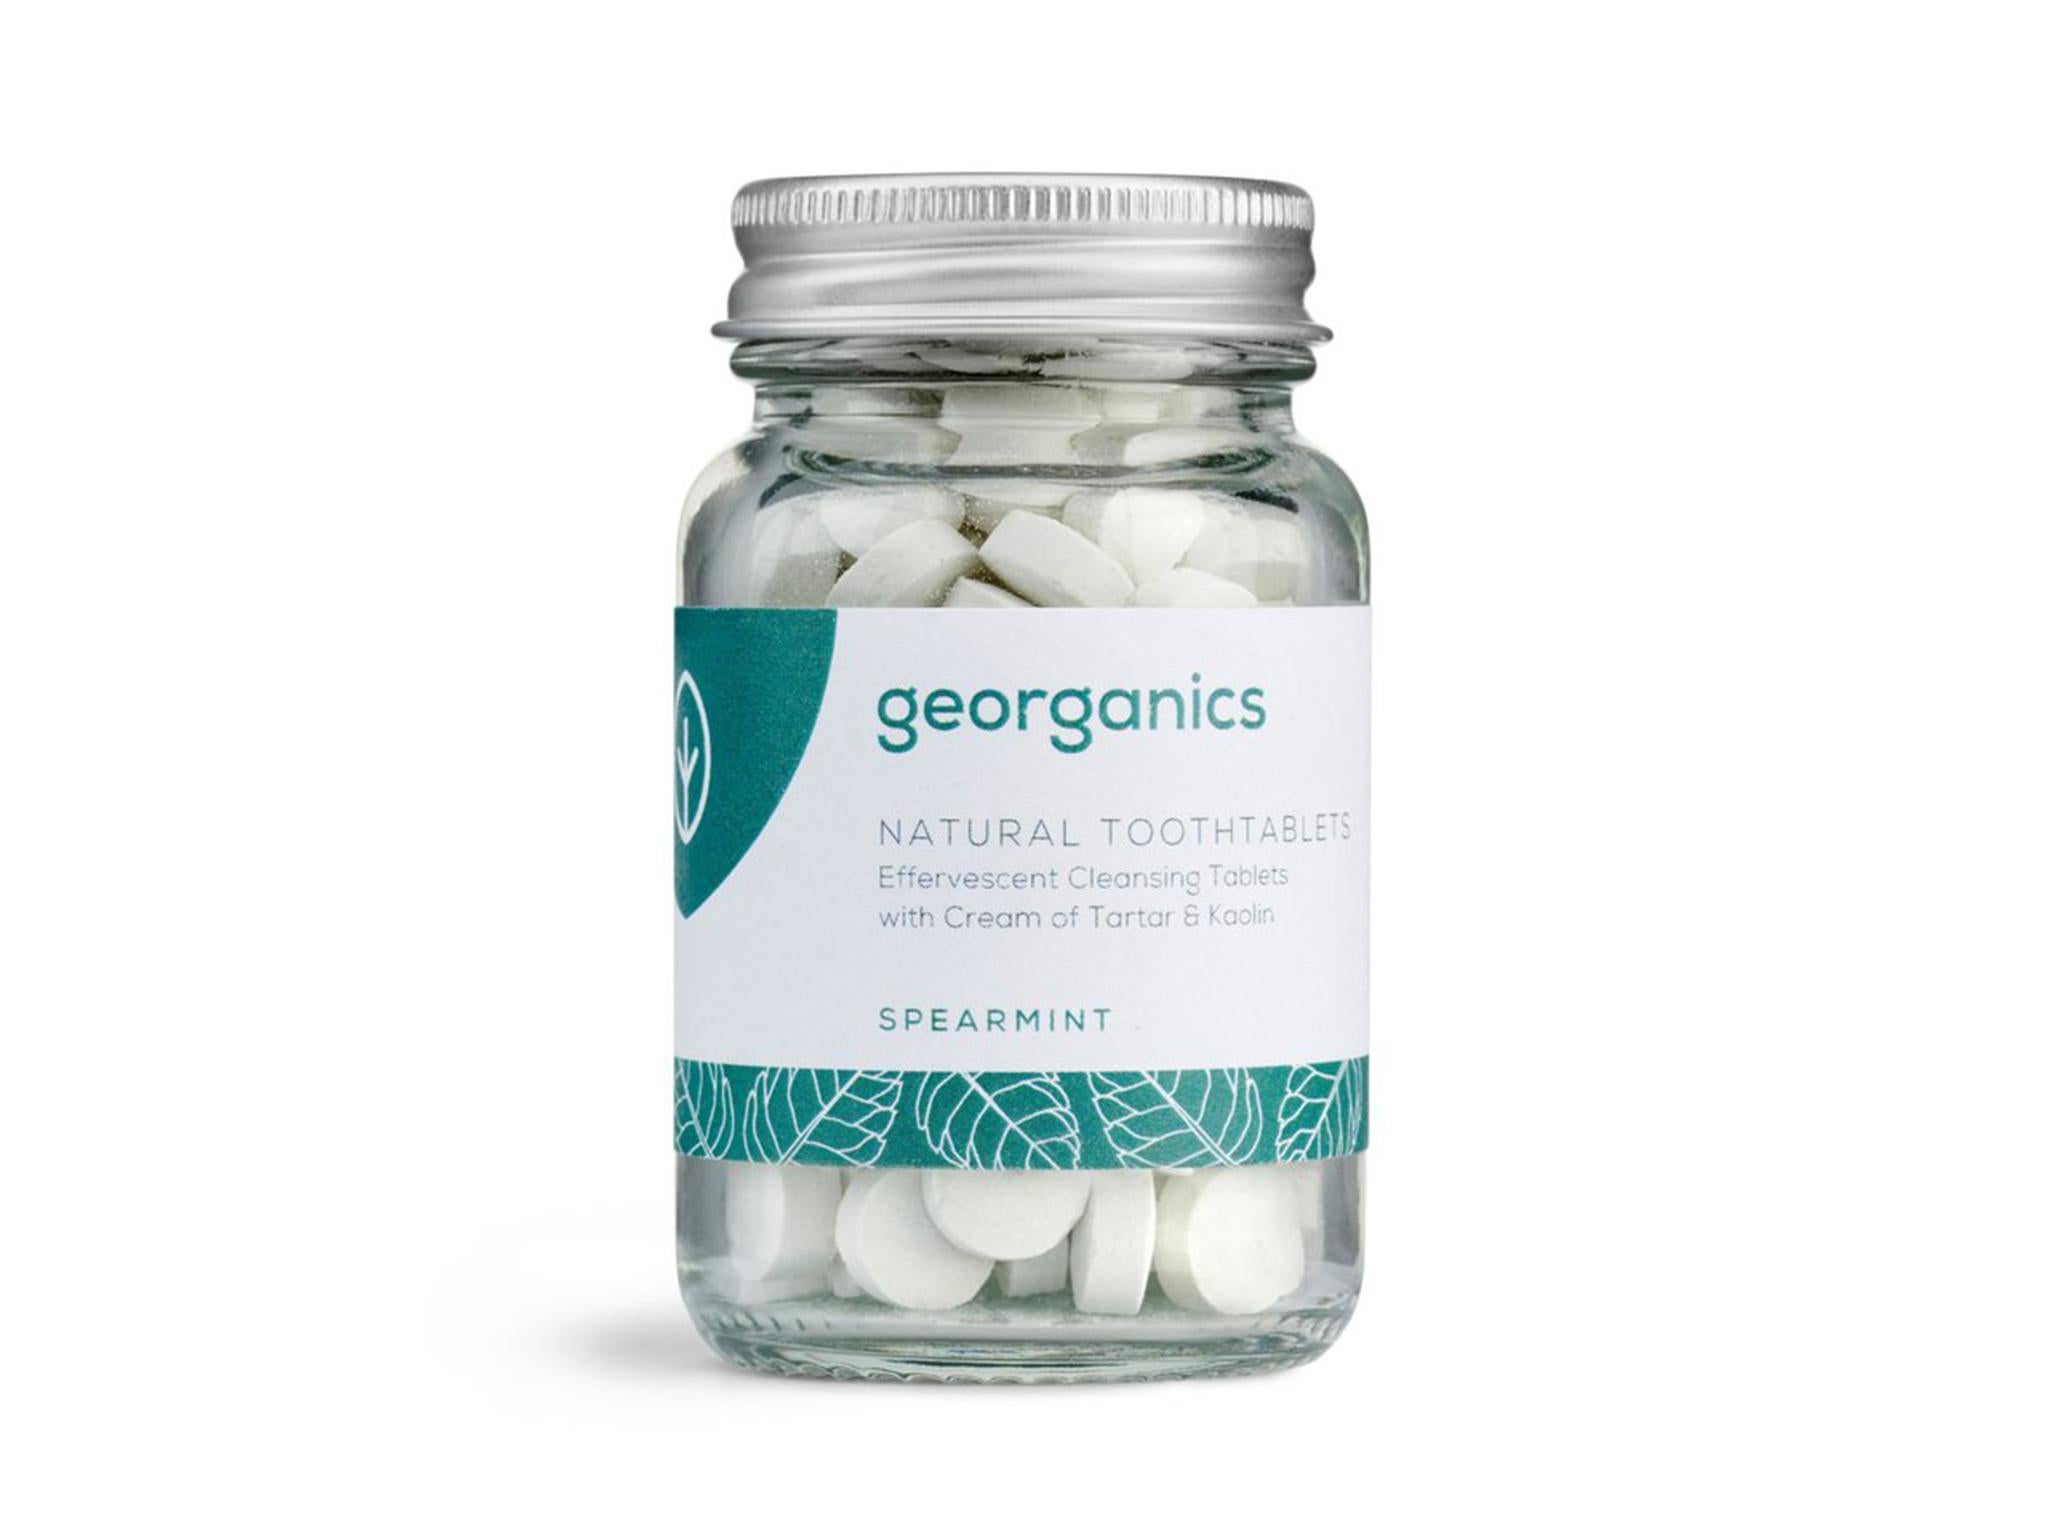 georganics-toothtablets-indybest.jpg